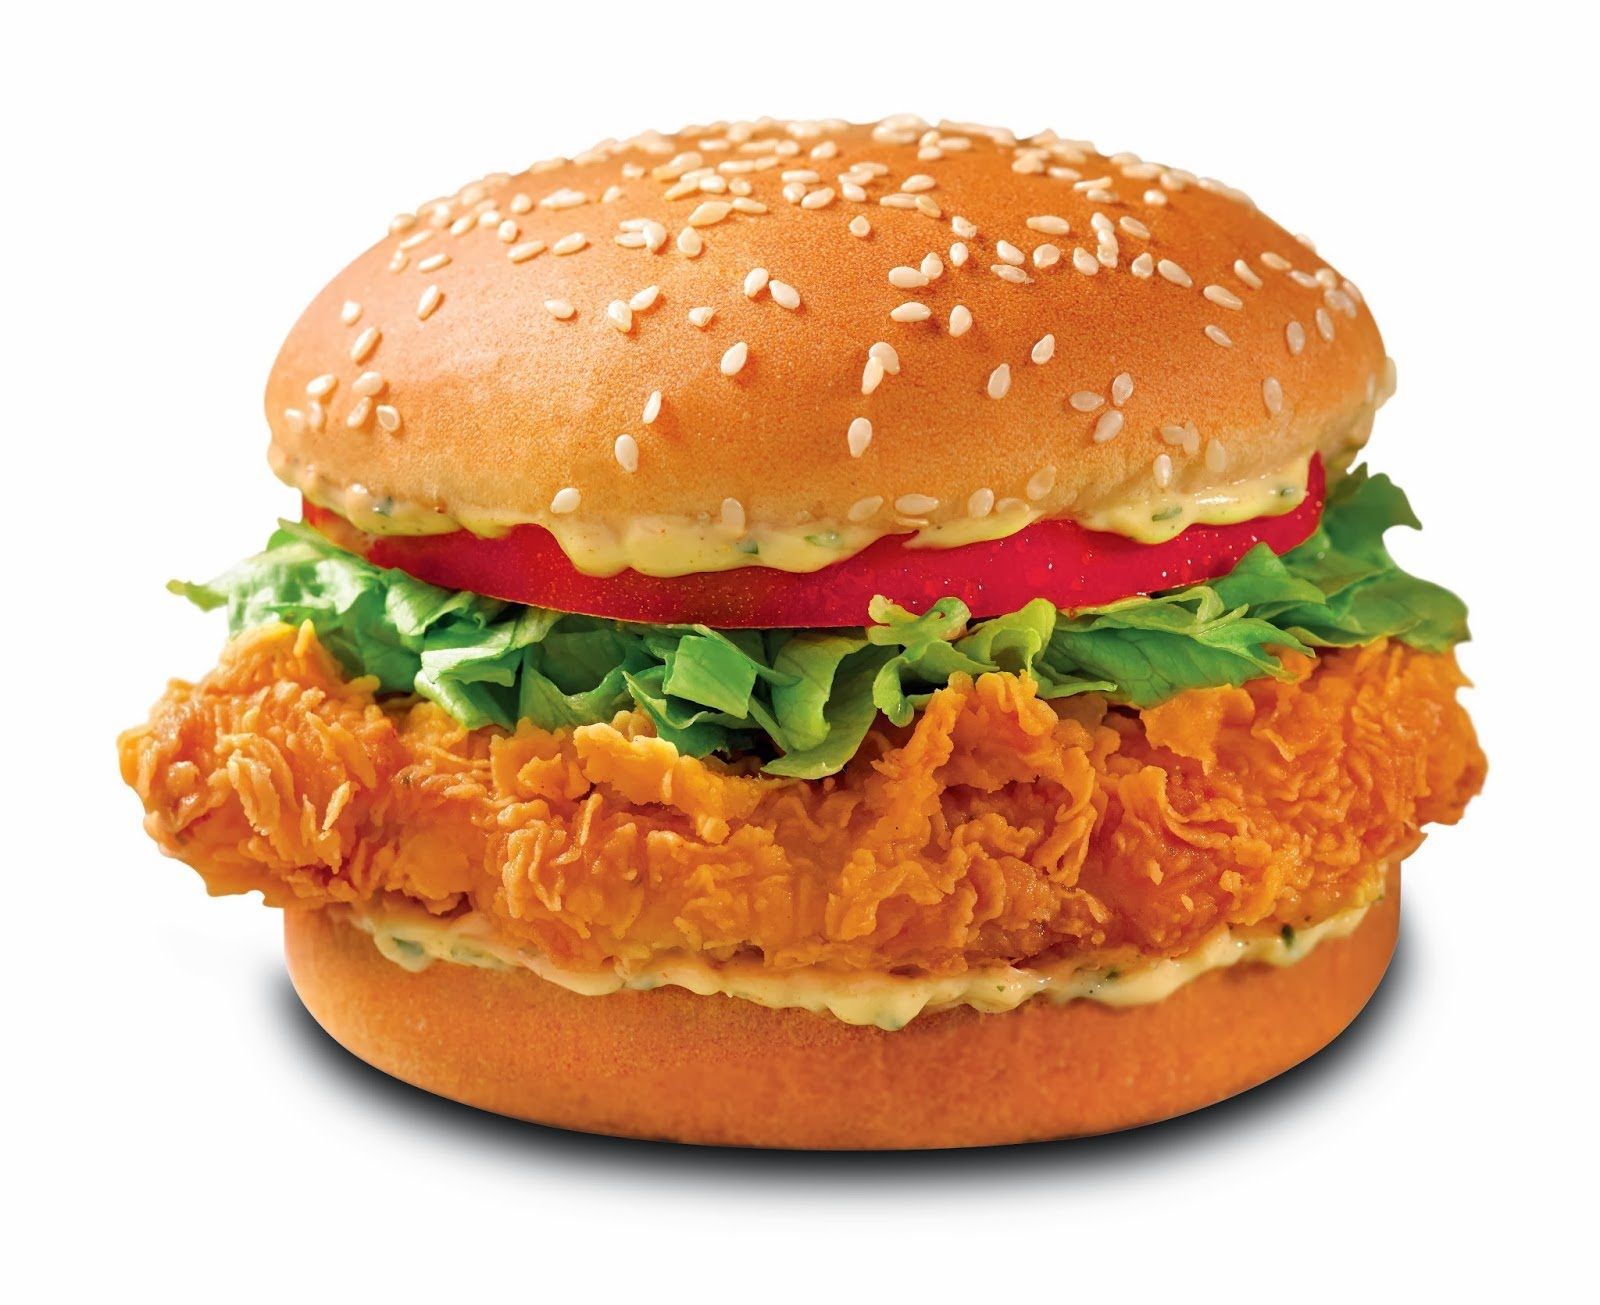 Zinger Burger HD Wallpaper 2. Chicken burgers, Chicken fillet burger, Crispy chicken